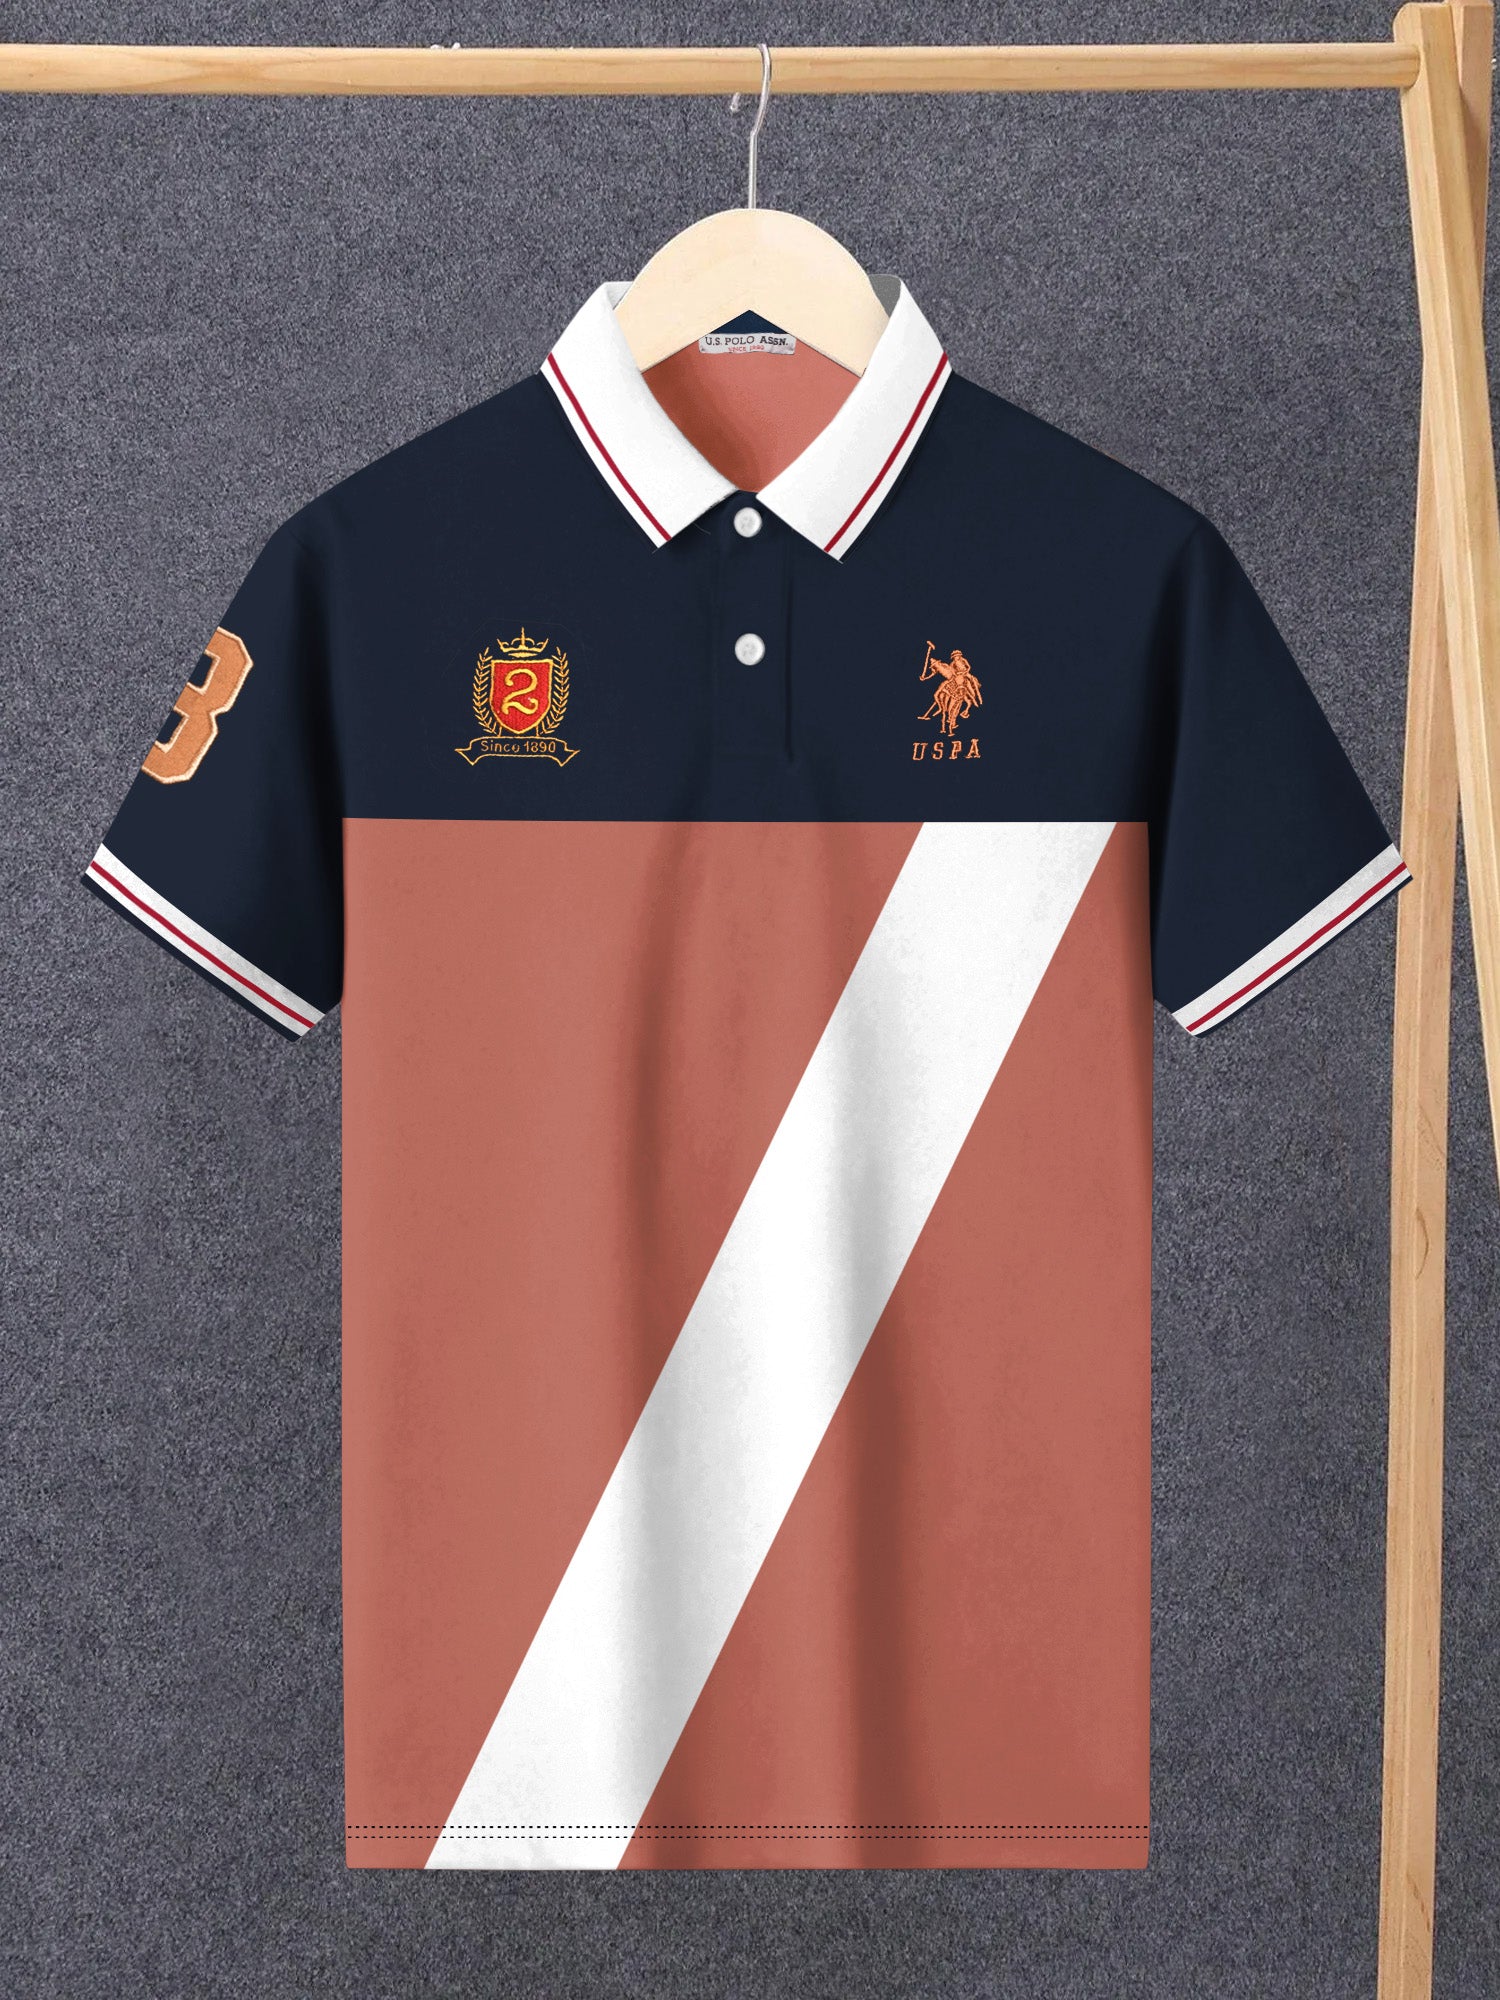 U.S Polo Assn. Summer Polo Shirt For Men-Dark Navy with Light Orange & White Panel-BE830/BR13069